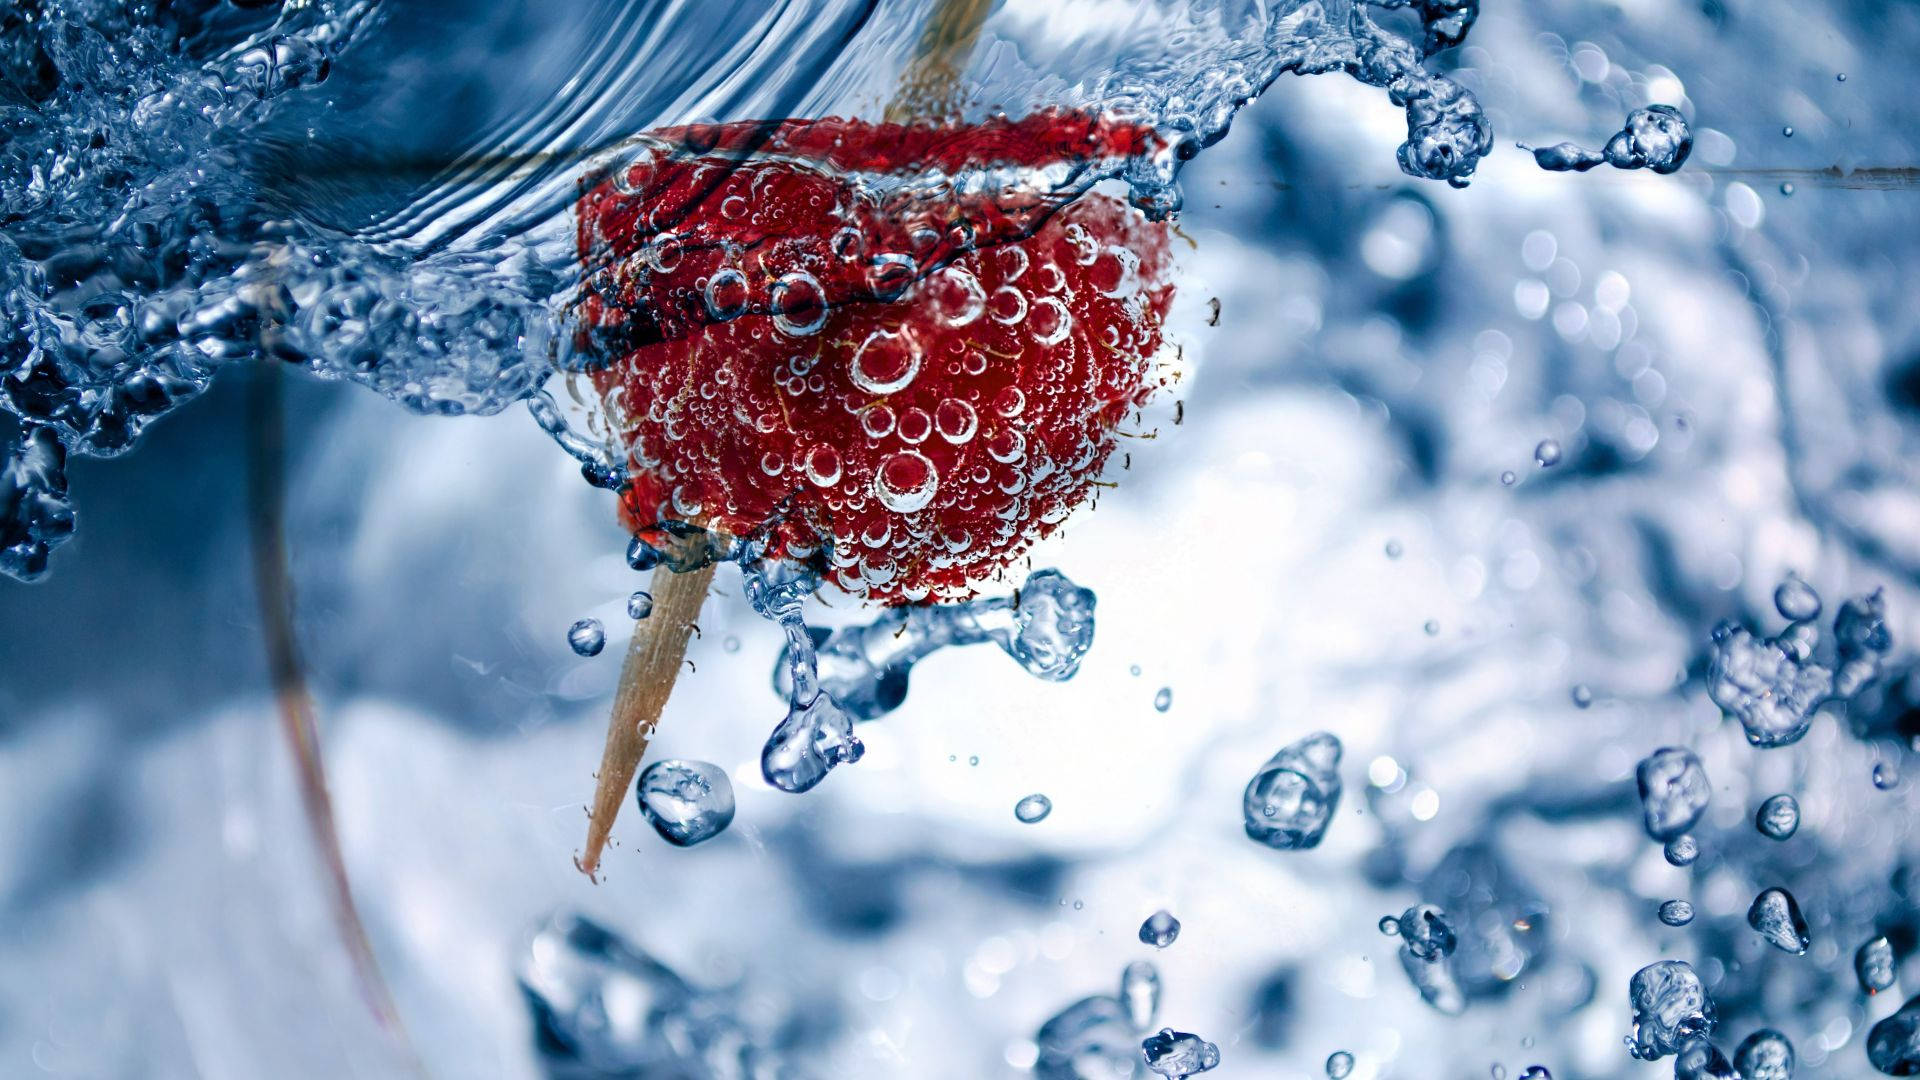 Underwater Red Raspberries On Stick Wallpaper